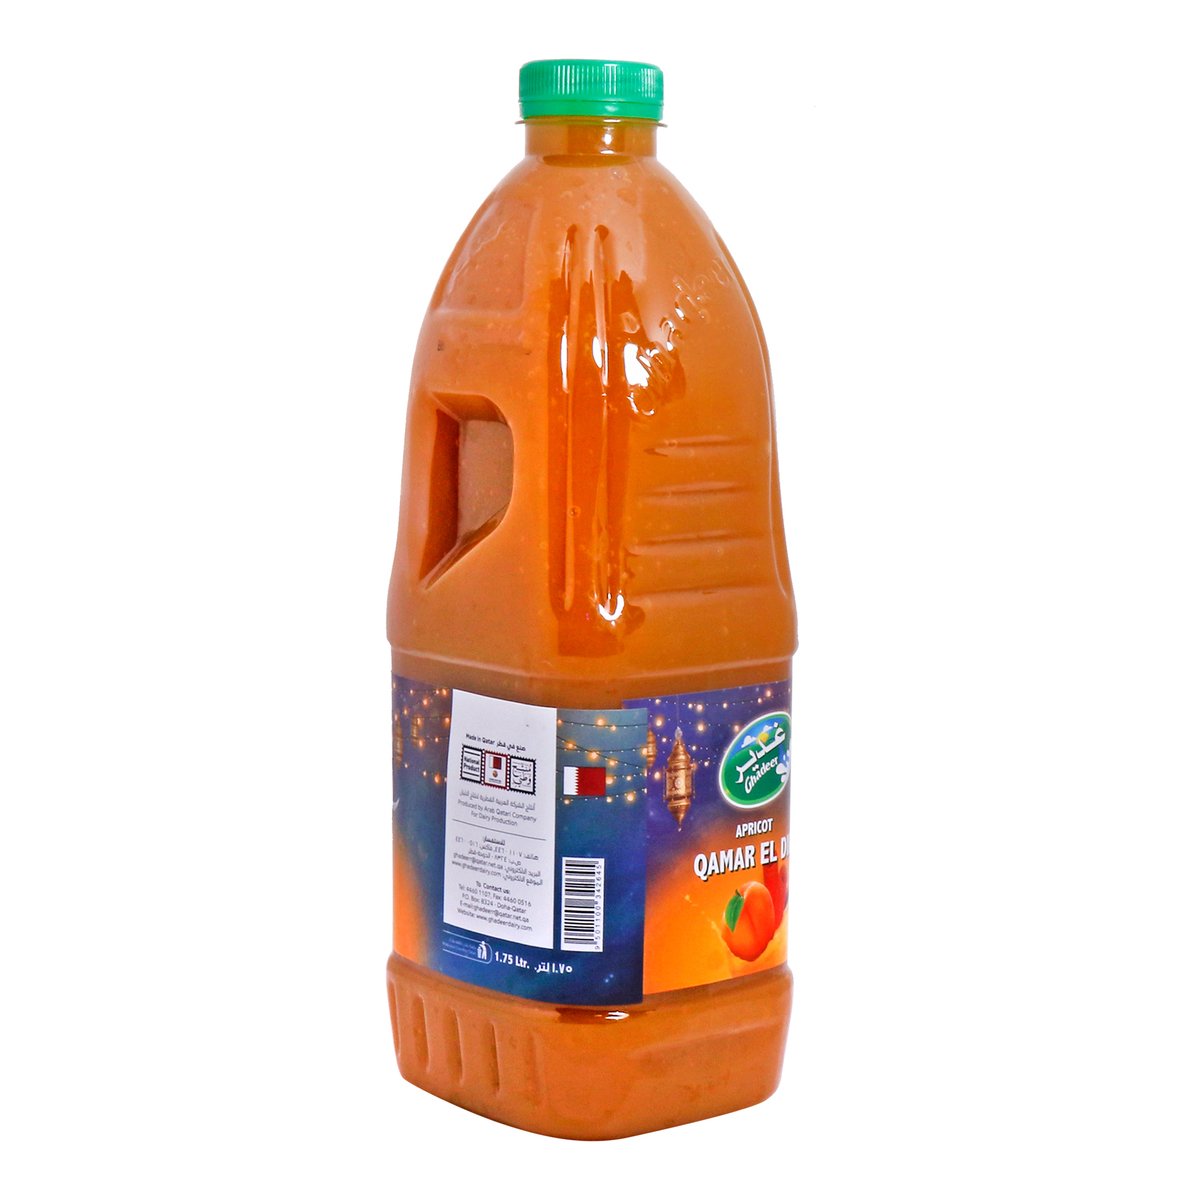 Ghadeer Apricot Qamar El Din Juice 1.75Litre